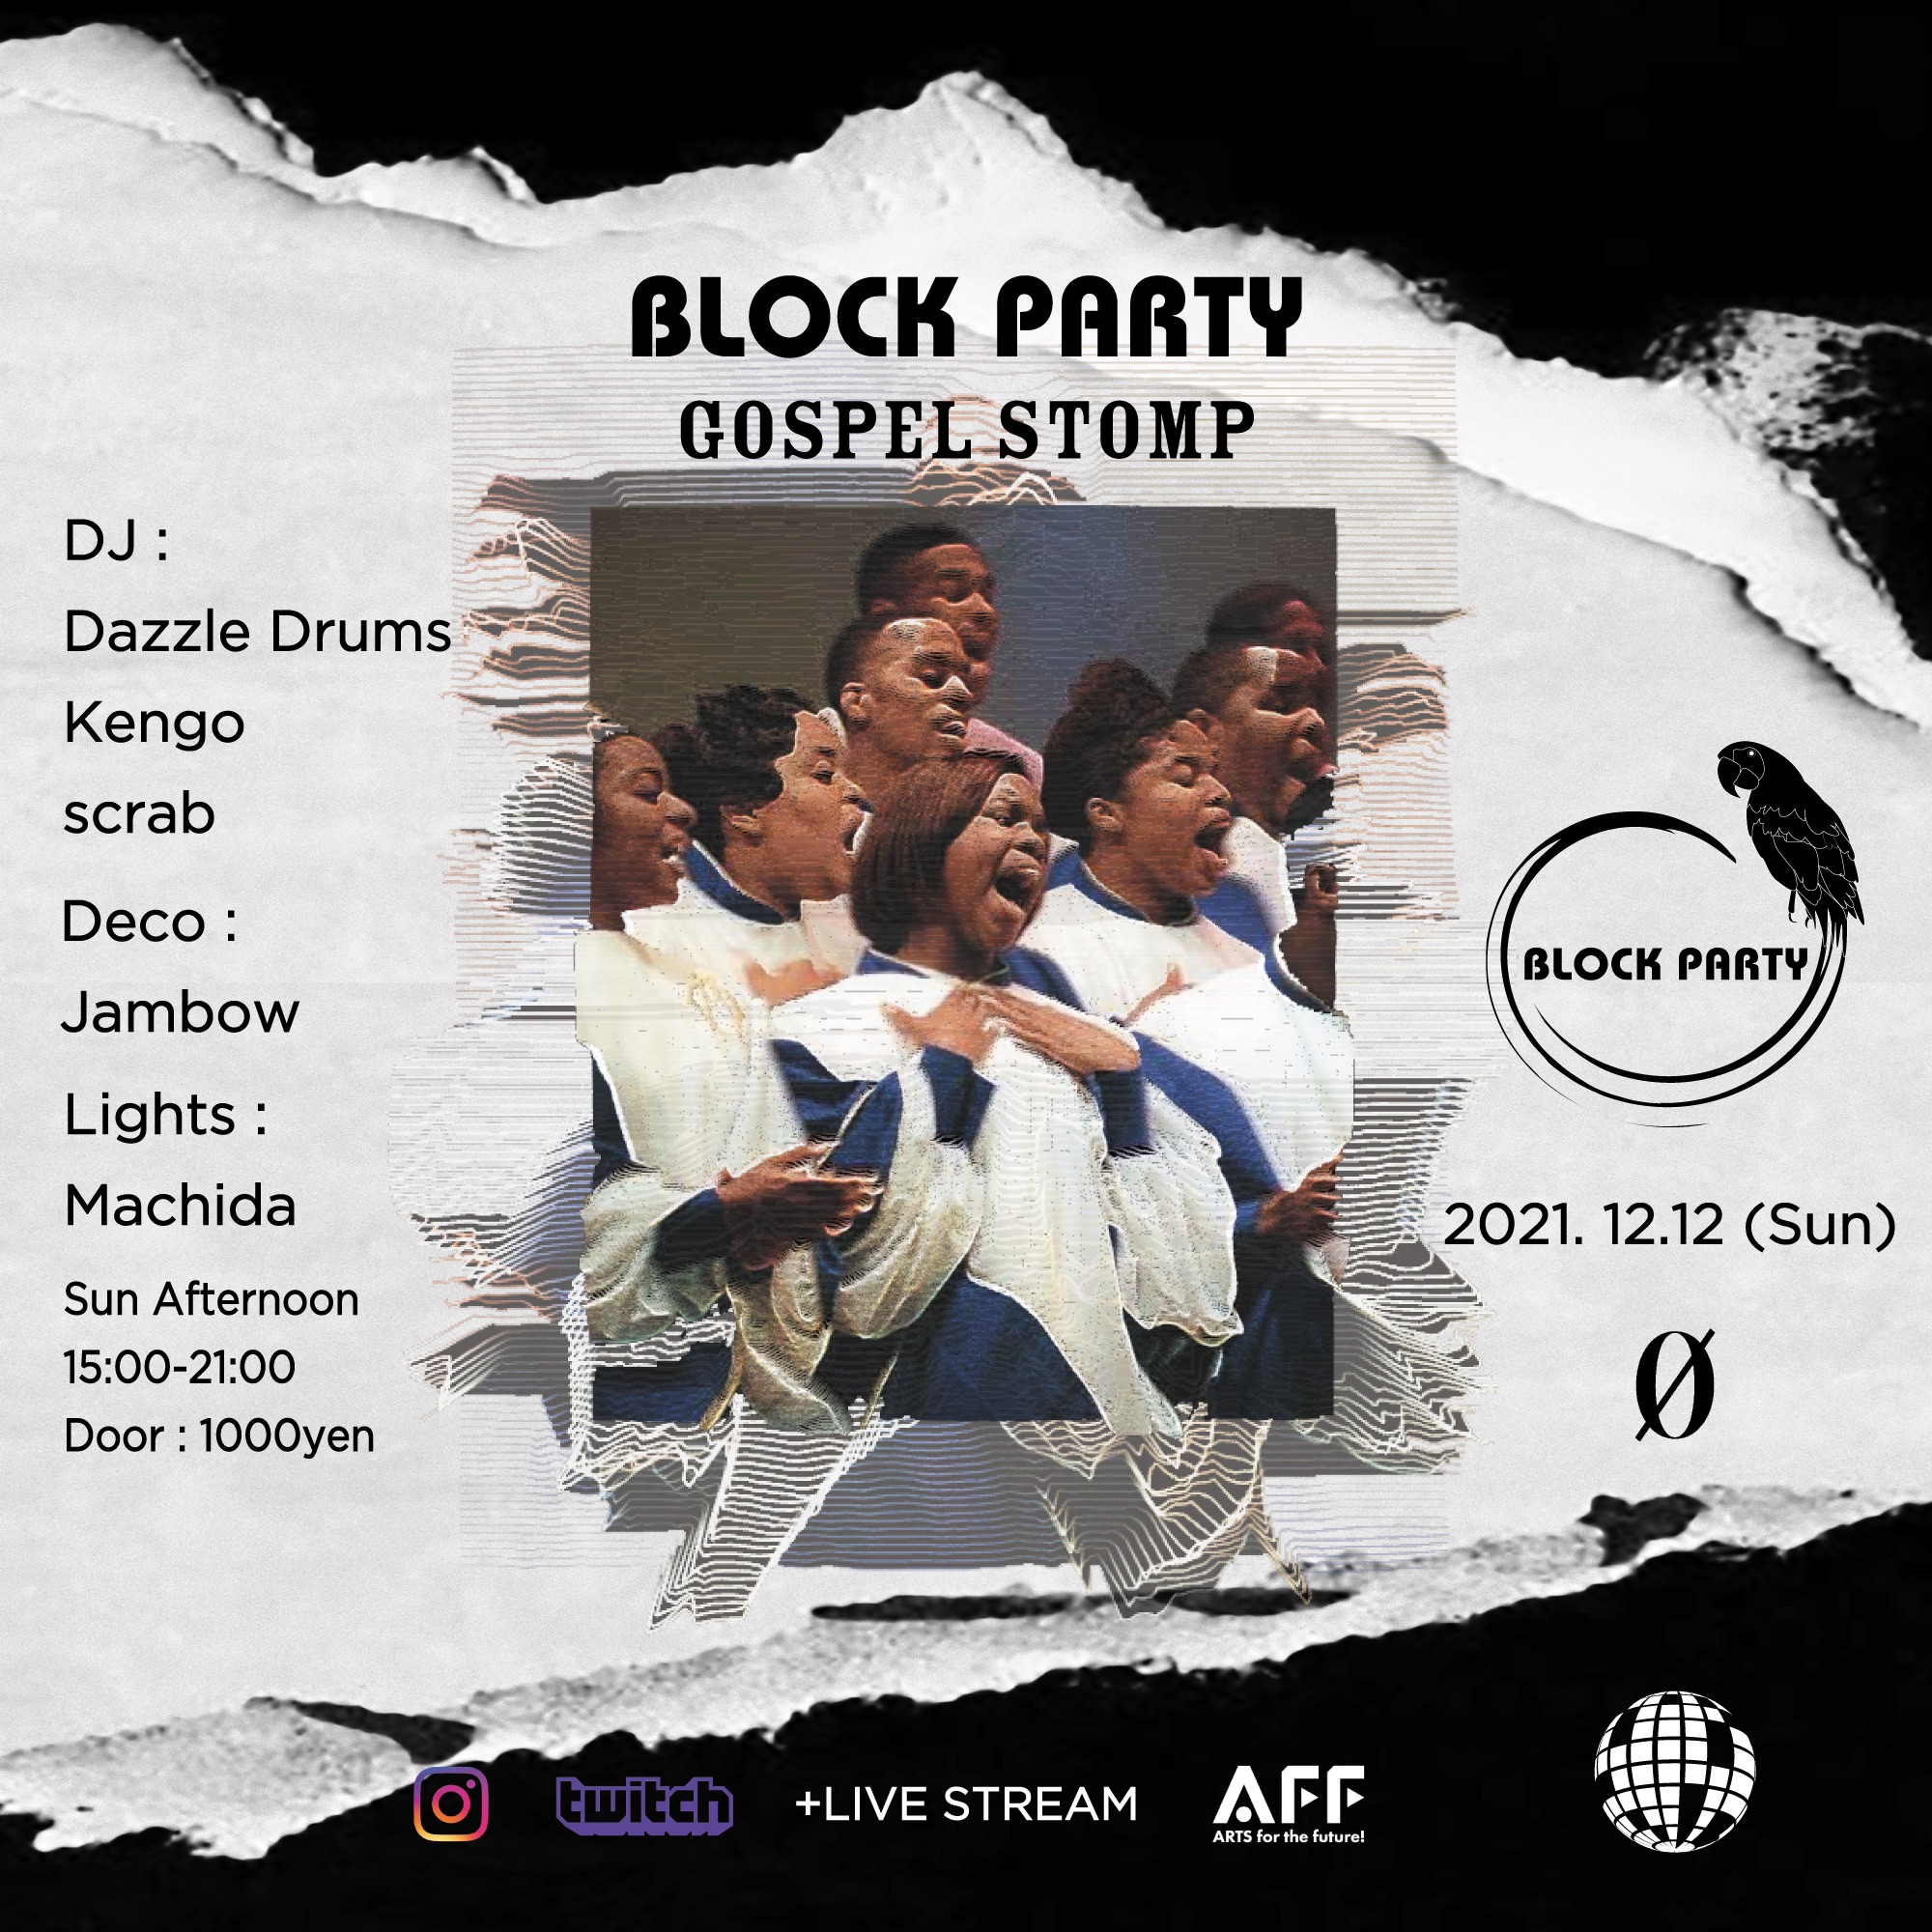 12.12.21 (Sun 15:00-21:00) Block Party “Gospel Stomp” + Live Stream @ 0 Zero